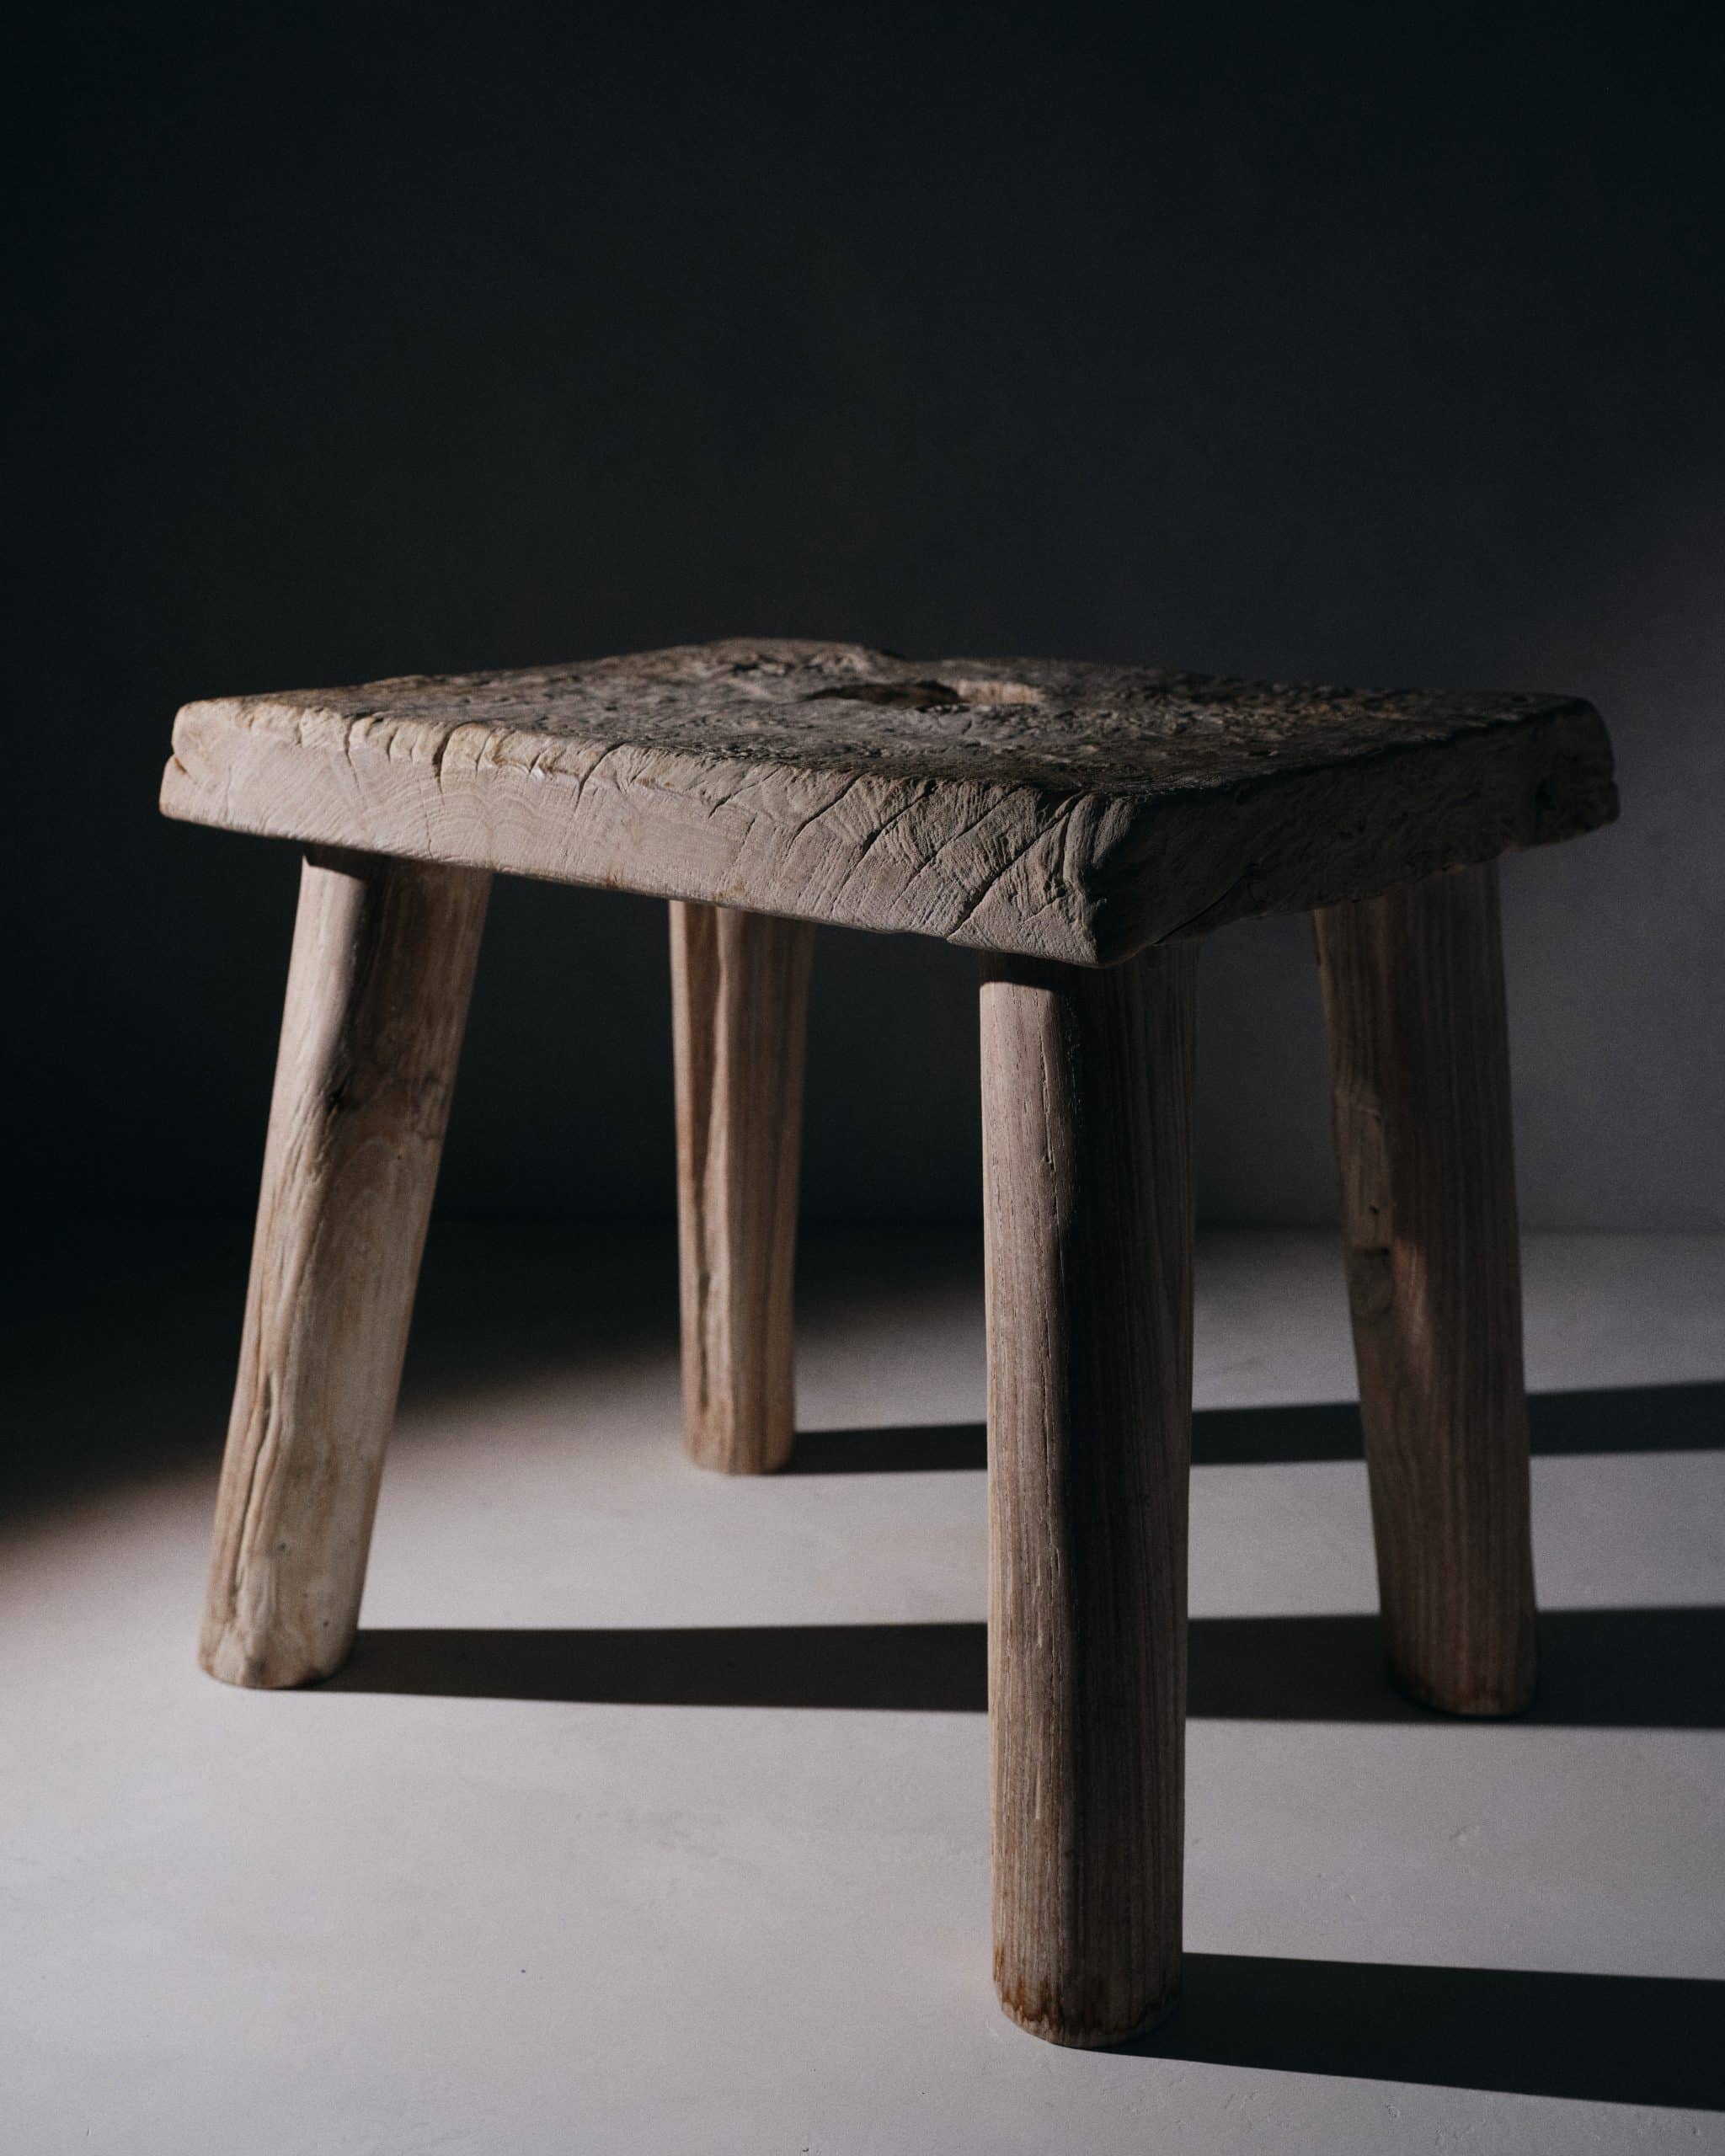 A rustic teak stool by Andrianna Shamaris